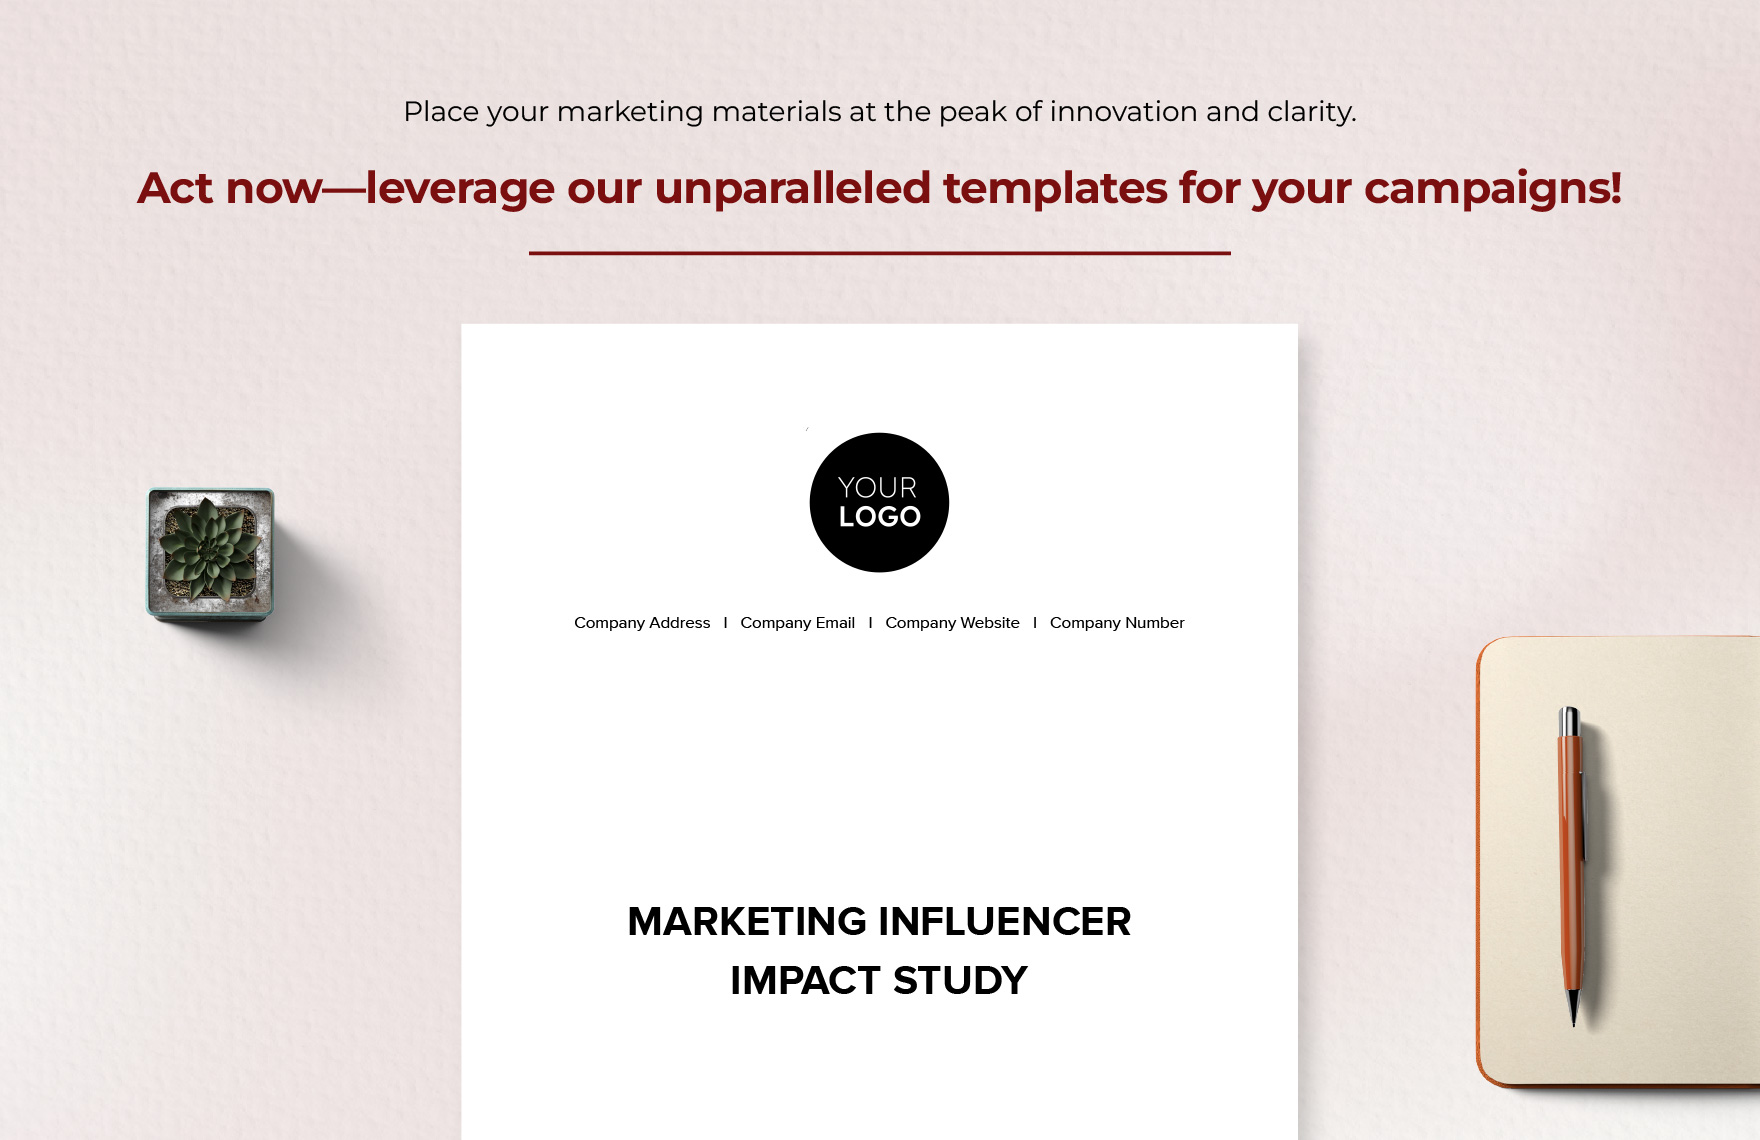 Marketing Influencer Impact Study Template